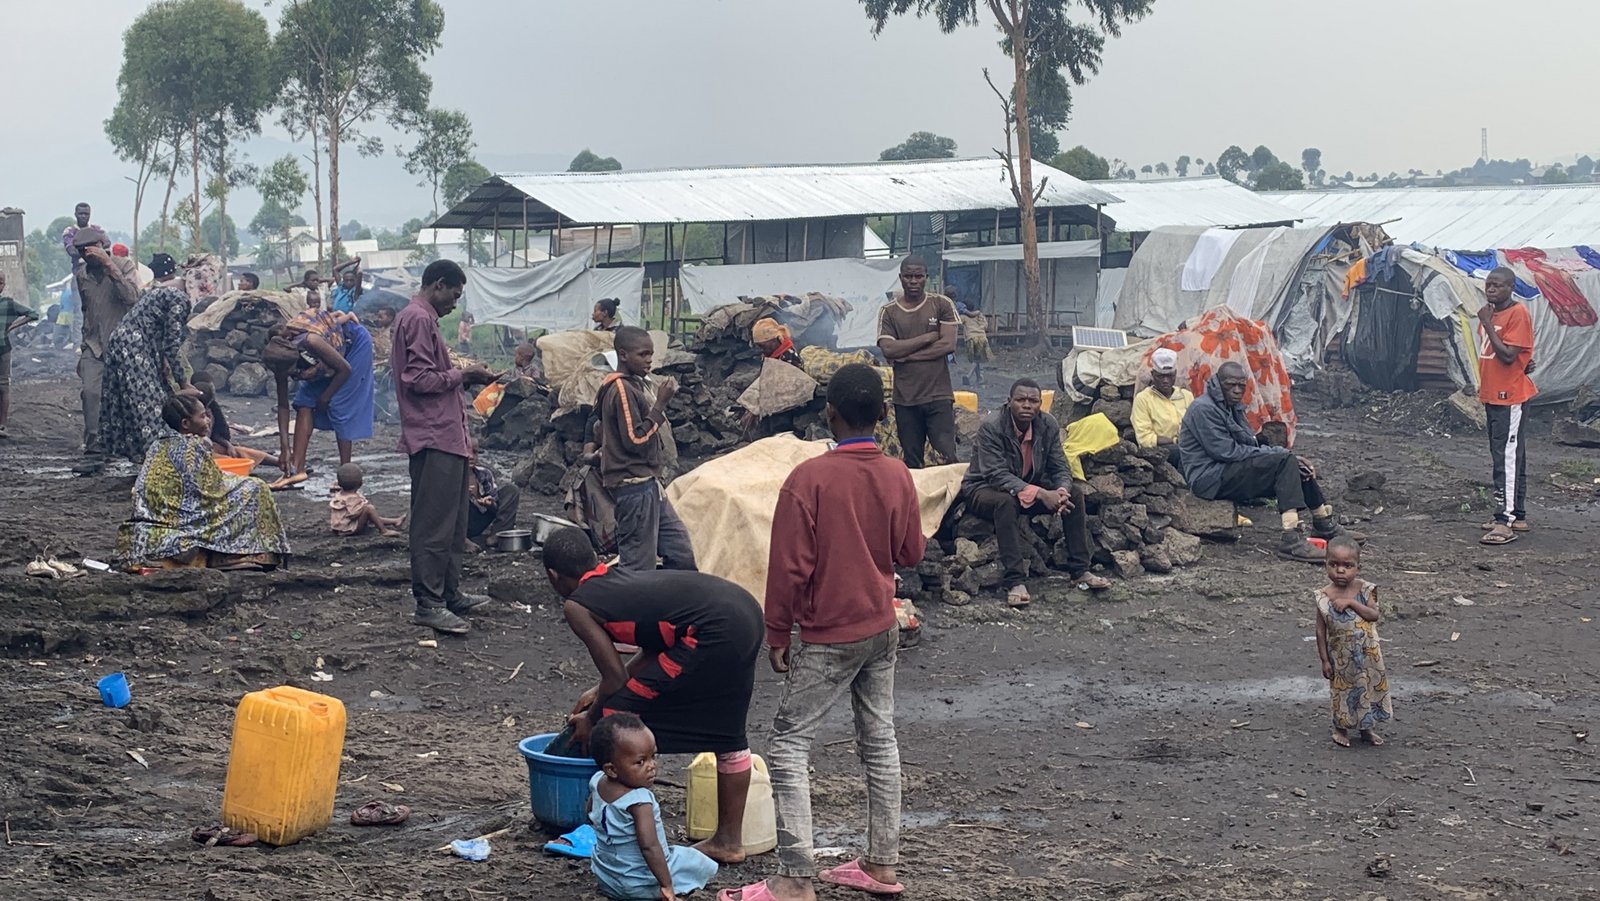 Flüchtlingcamp im Kongo